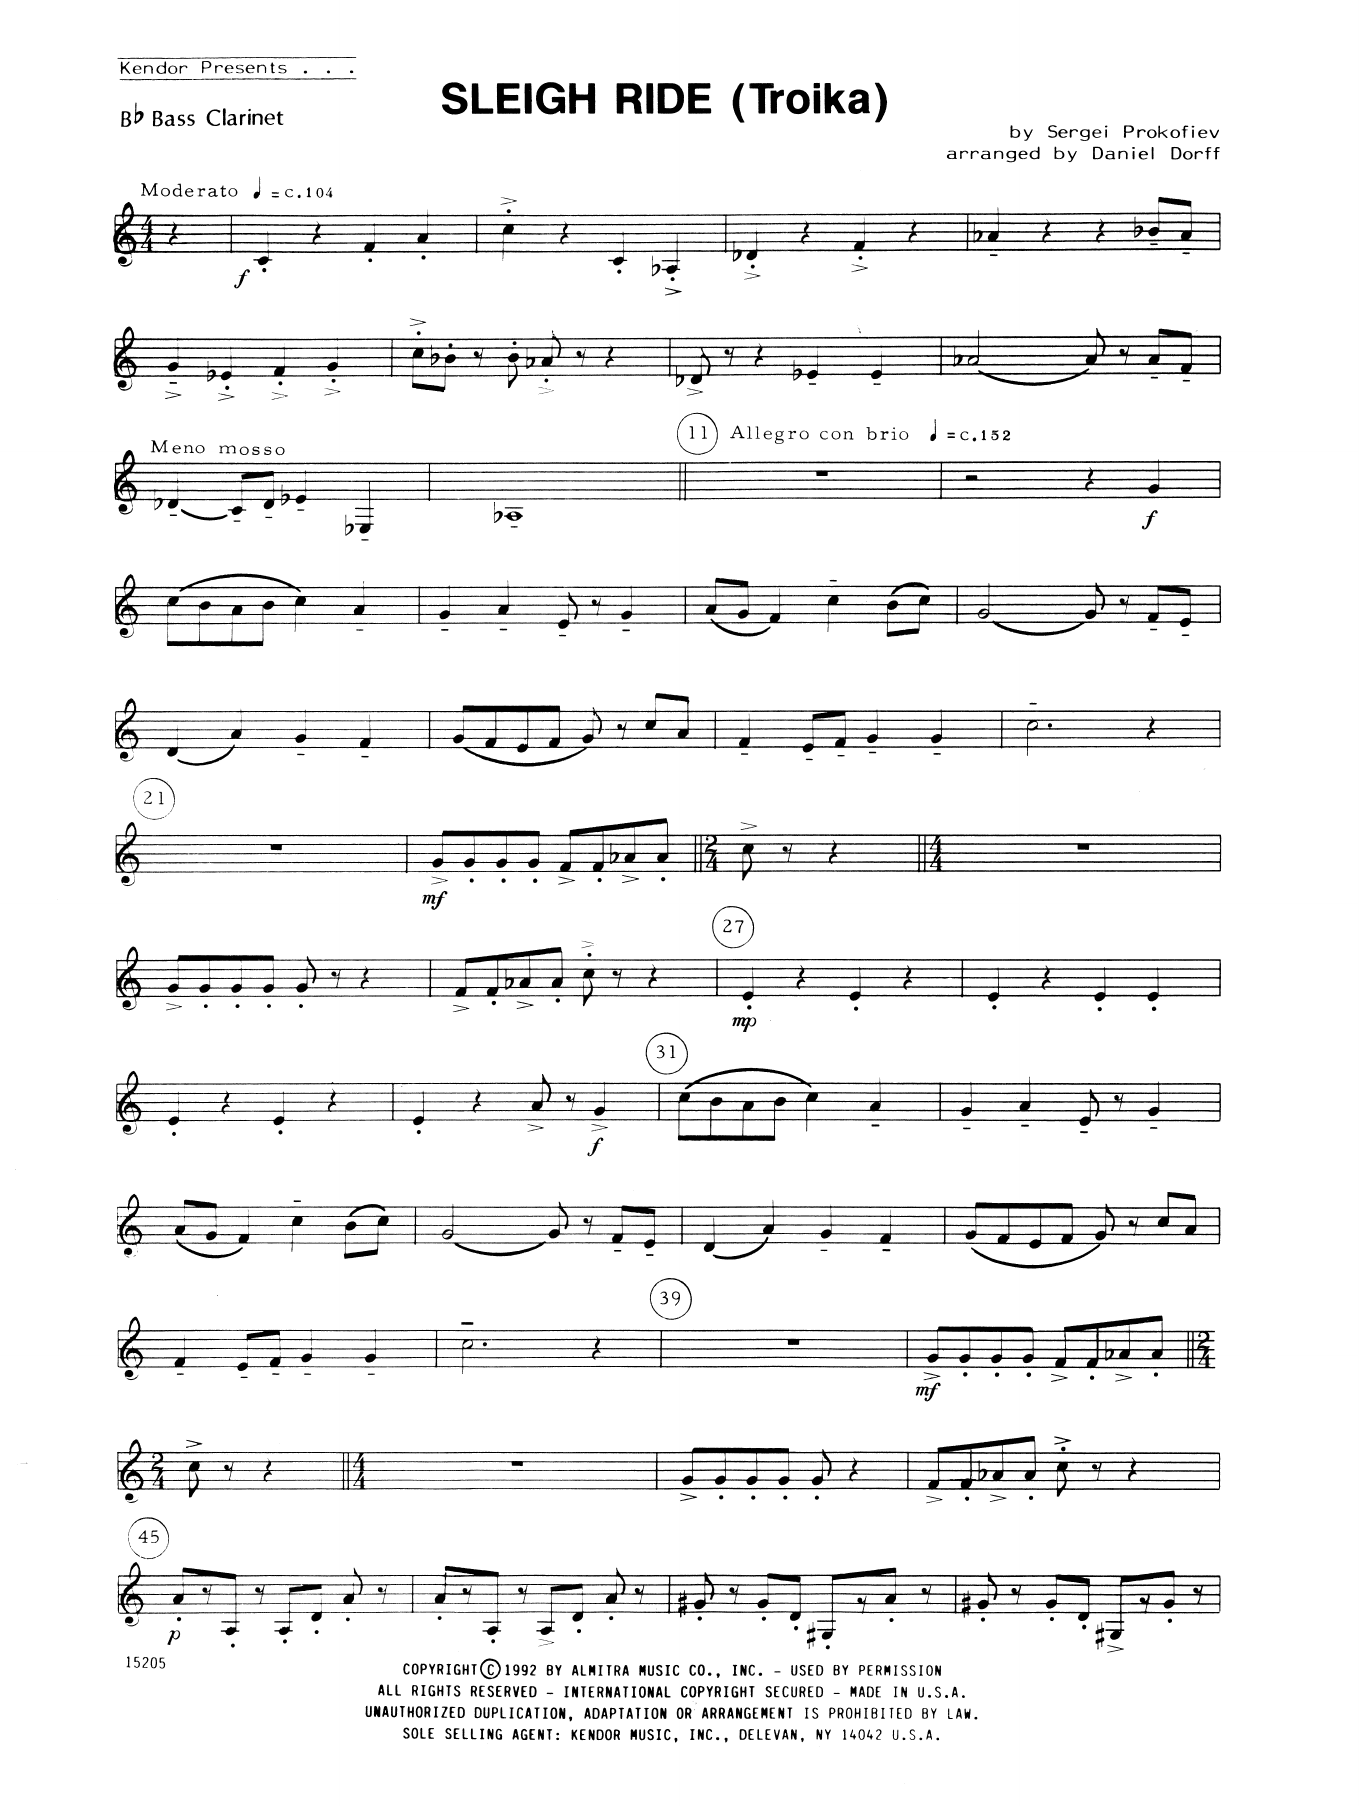 Download Daniel Dorff Sleigh Ride (Troika) - Bb Bass Clarinet Sheet Music